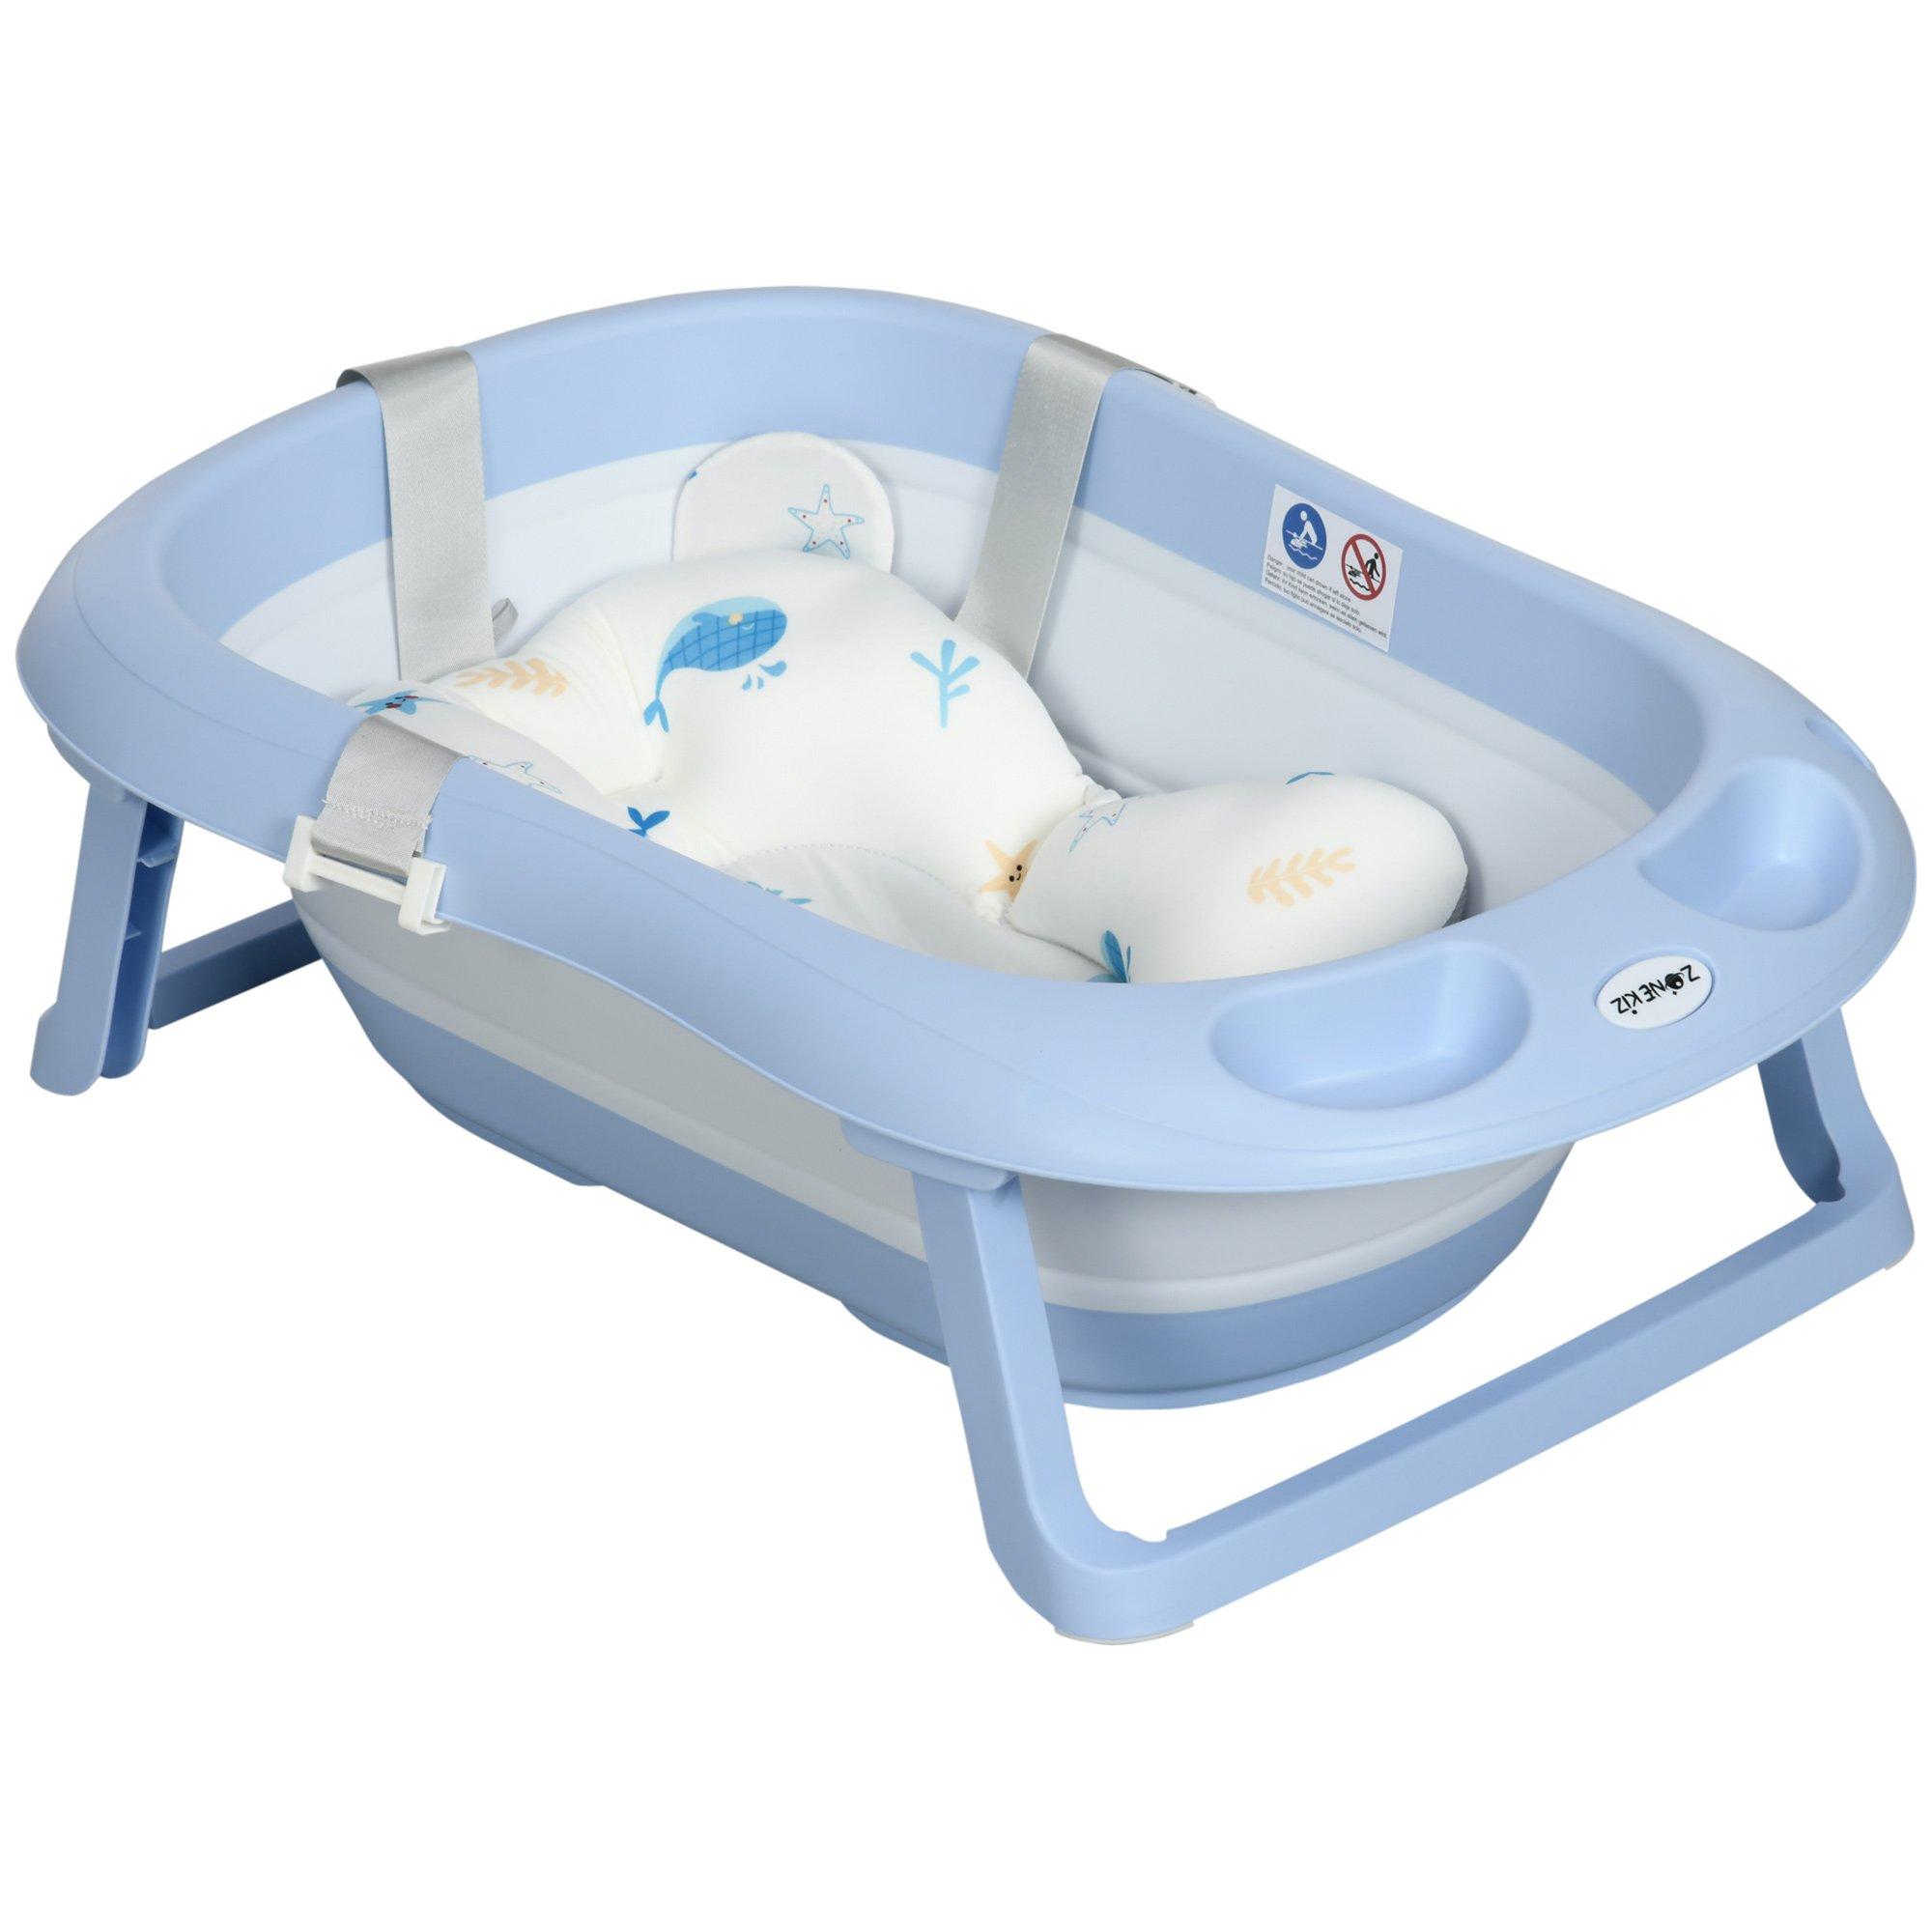 Foldable Baby Bathtub w/ Non-Slip Support Legs, Cushion, Shower Holder